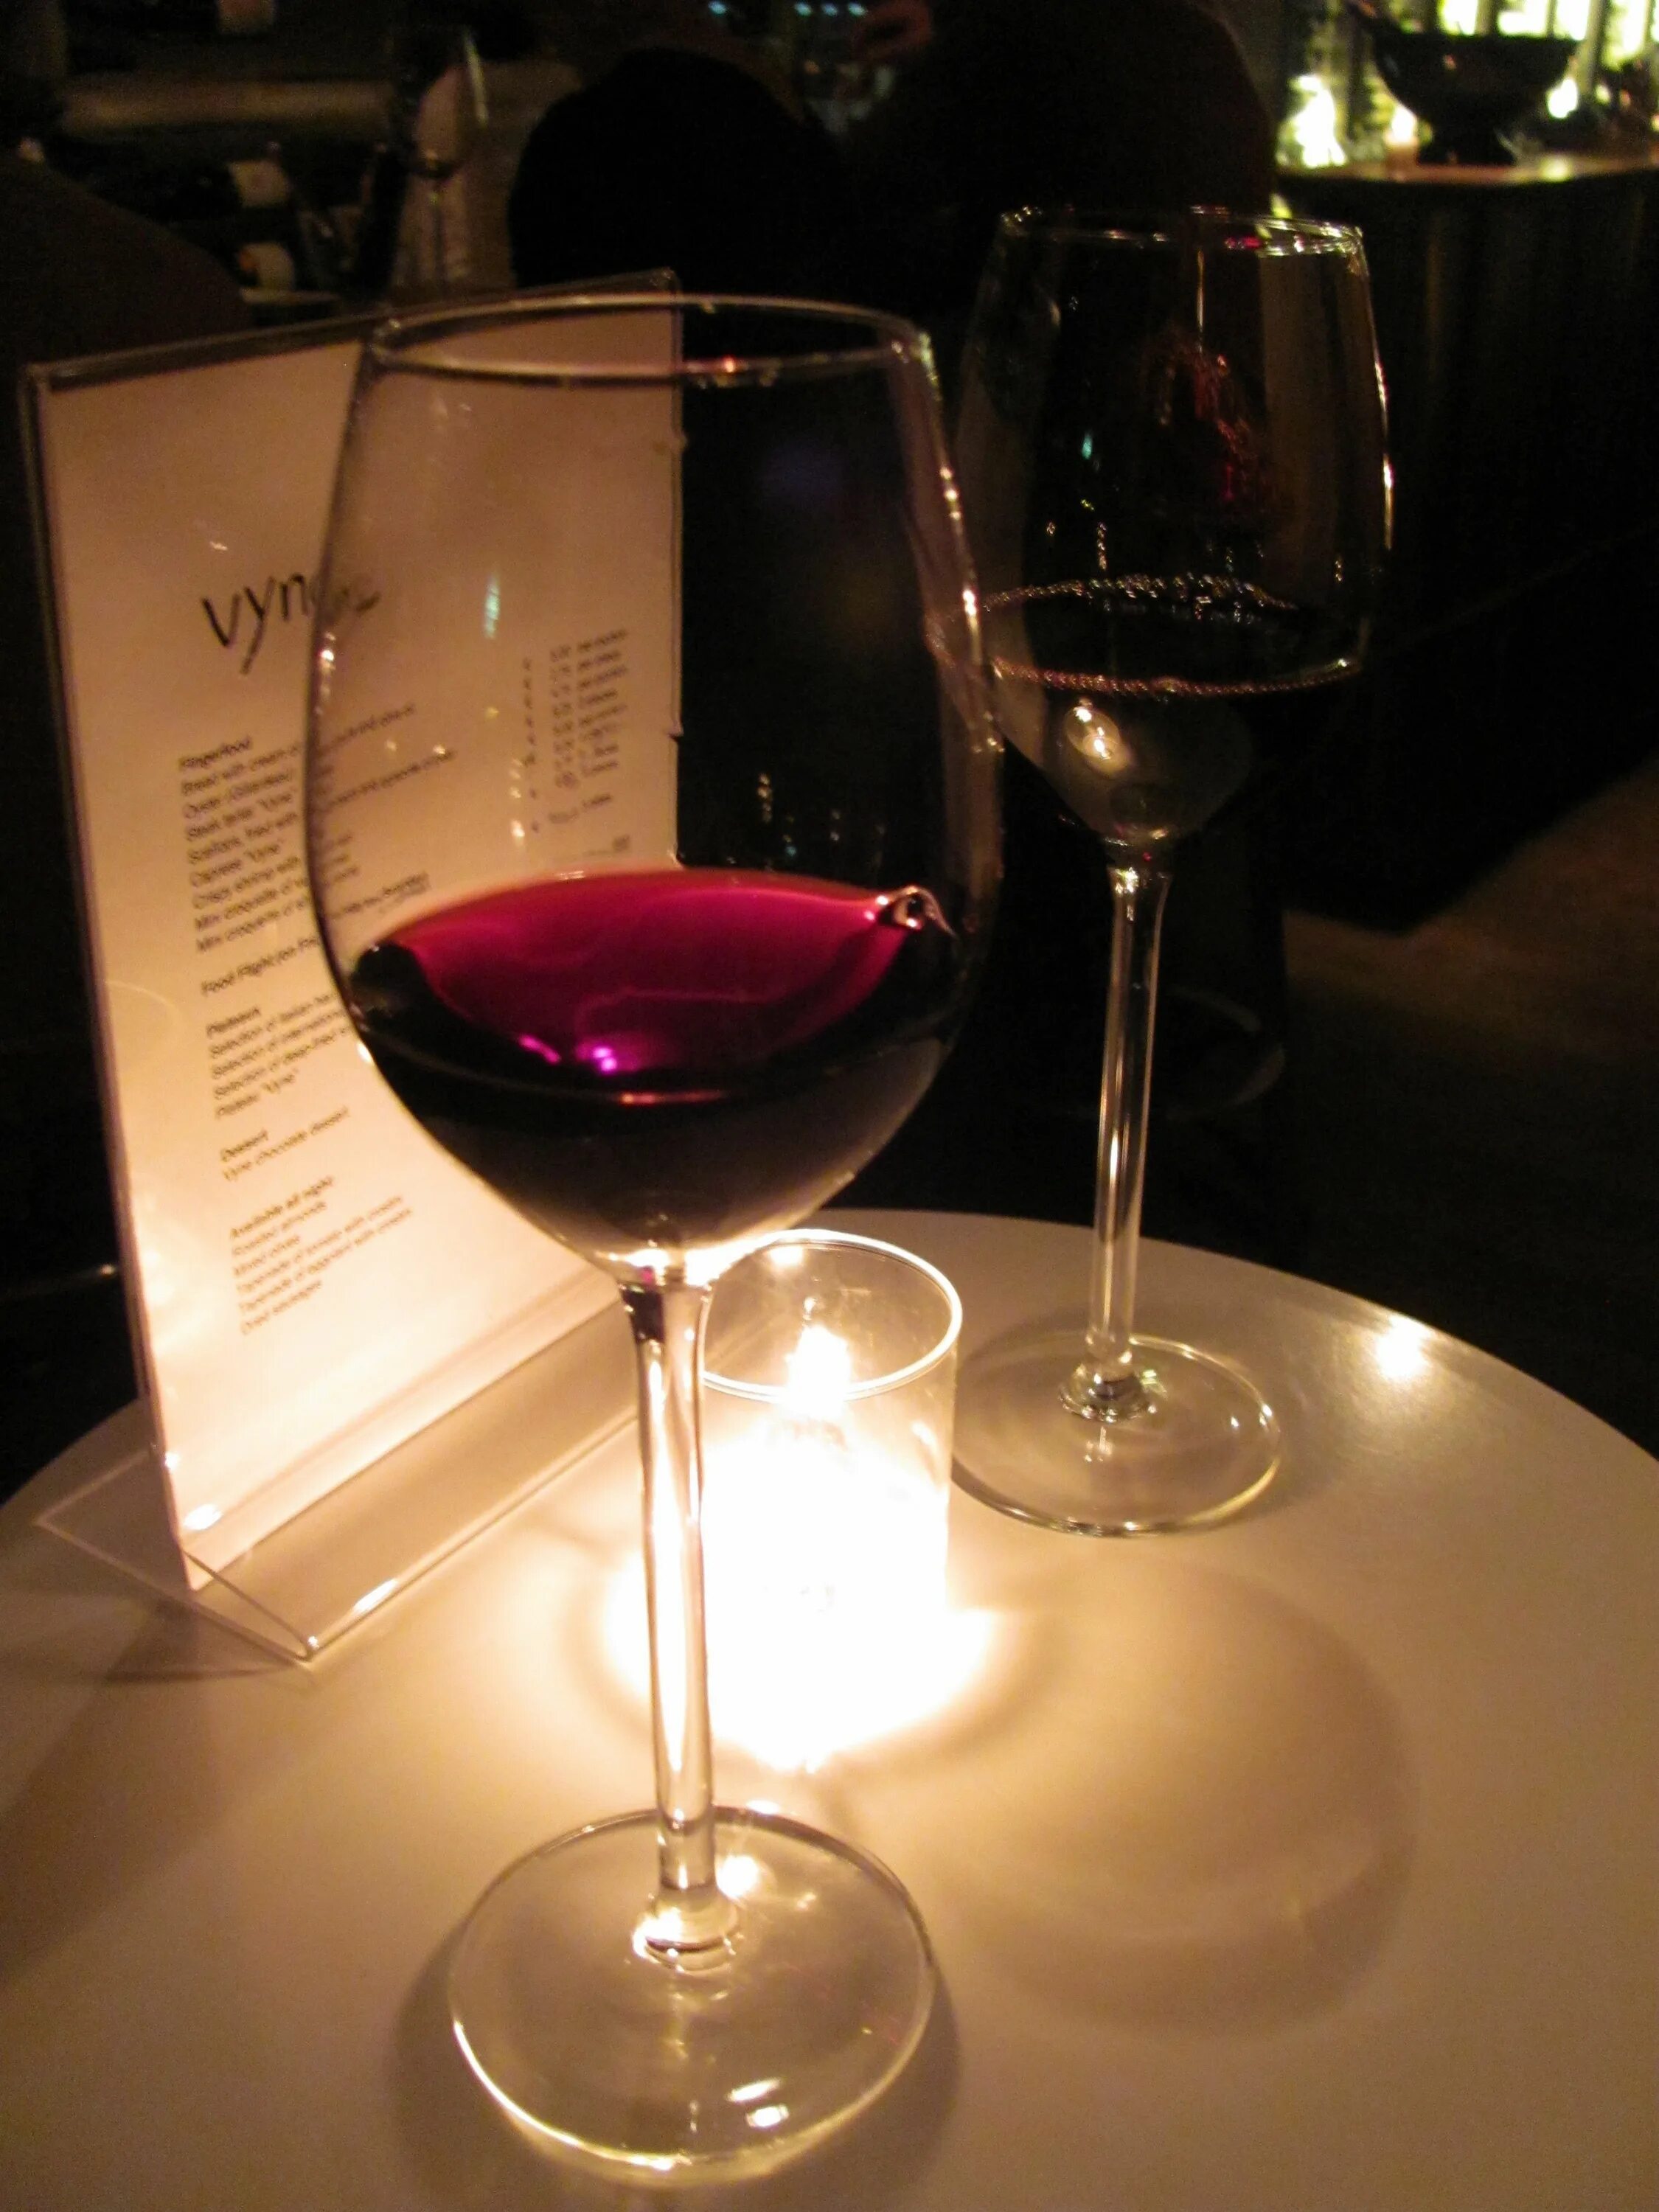 Бокал вина в ресторане. Бокал вина на столе в ресторане. Бокал с вином. Бокалы в ресторане.